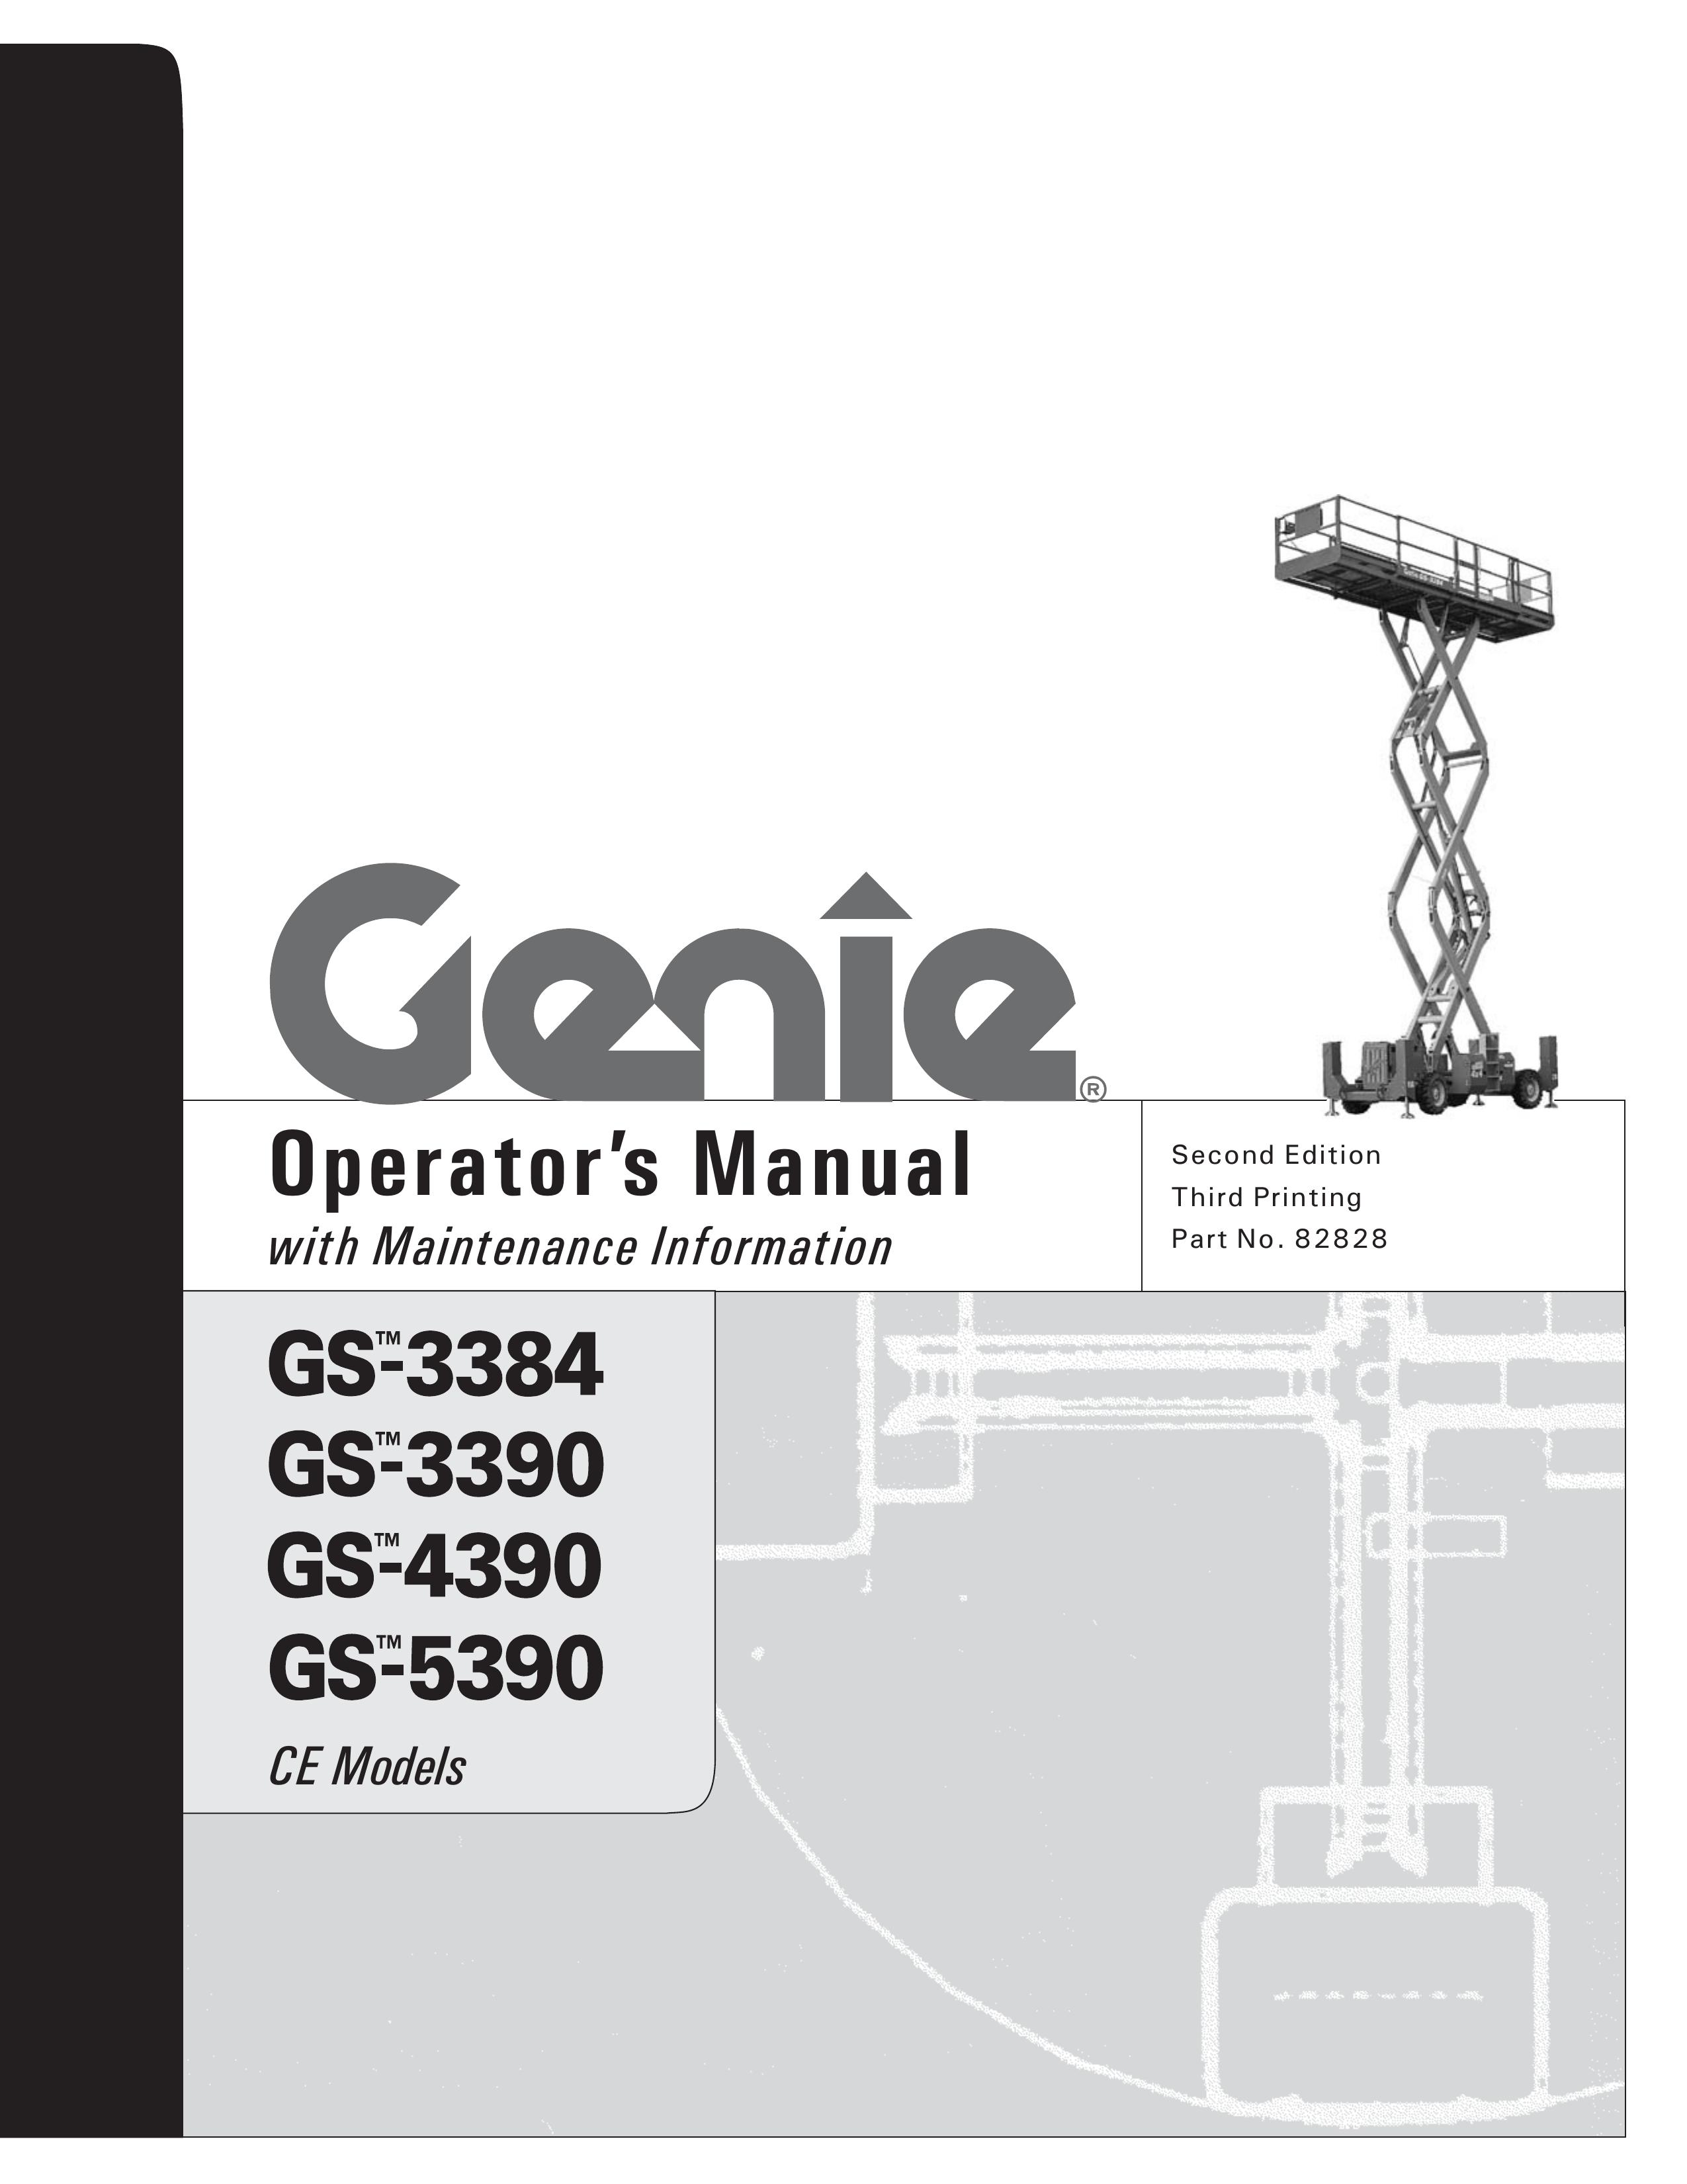 Genie GS-4390 Utility Vehicle User Manual